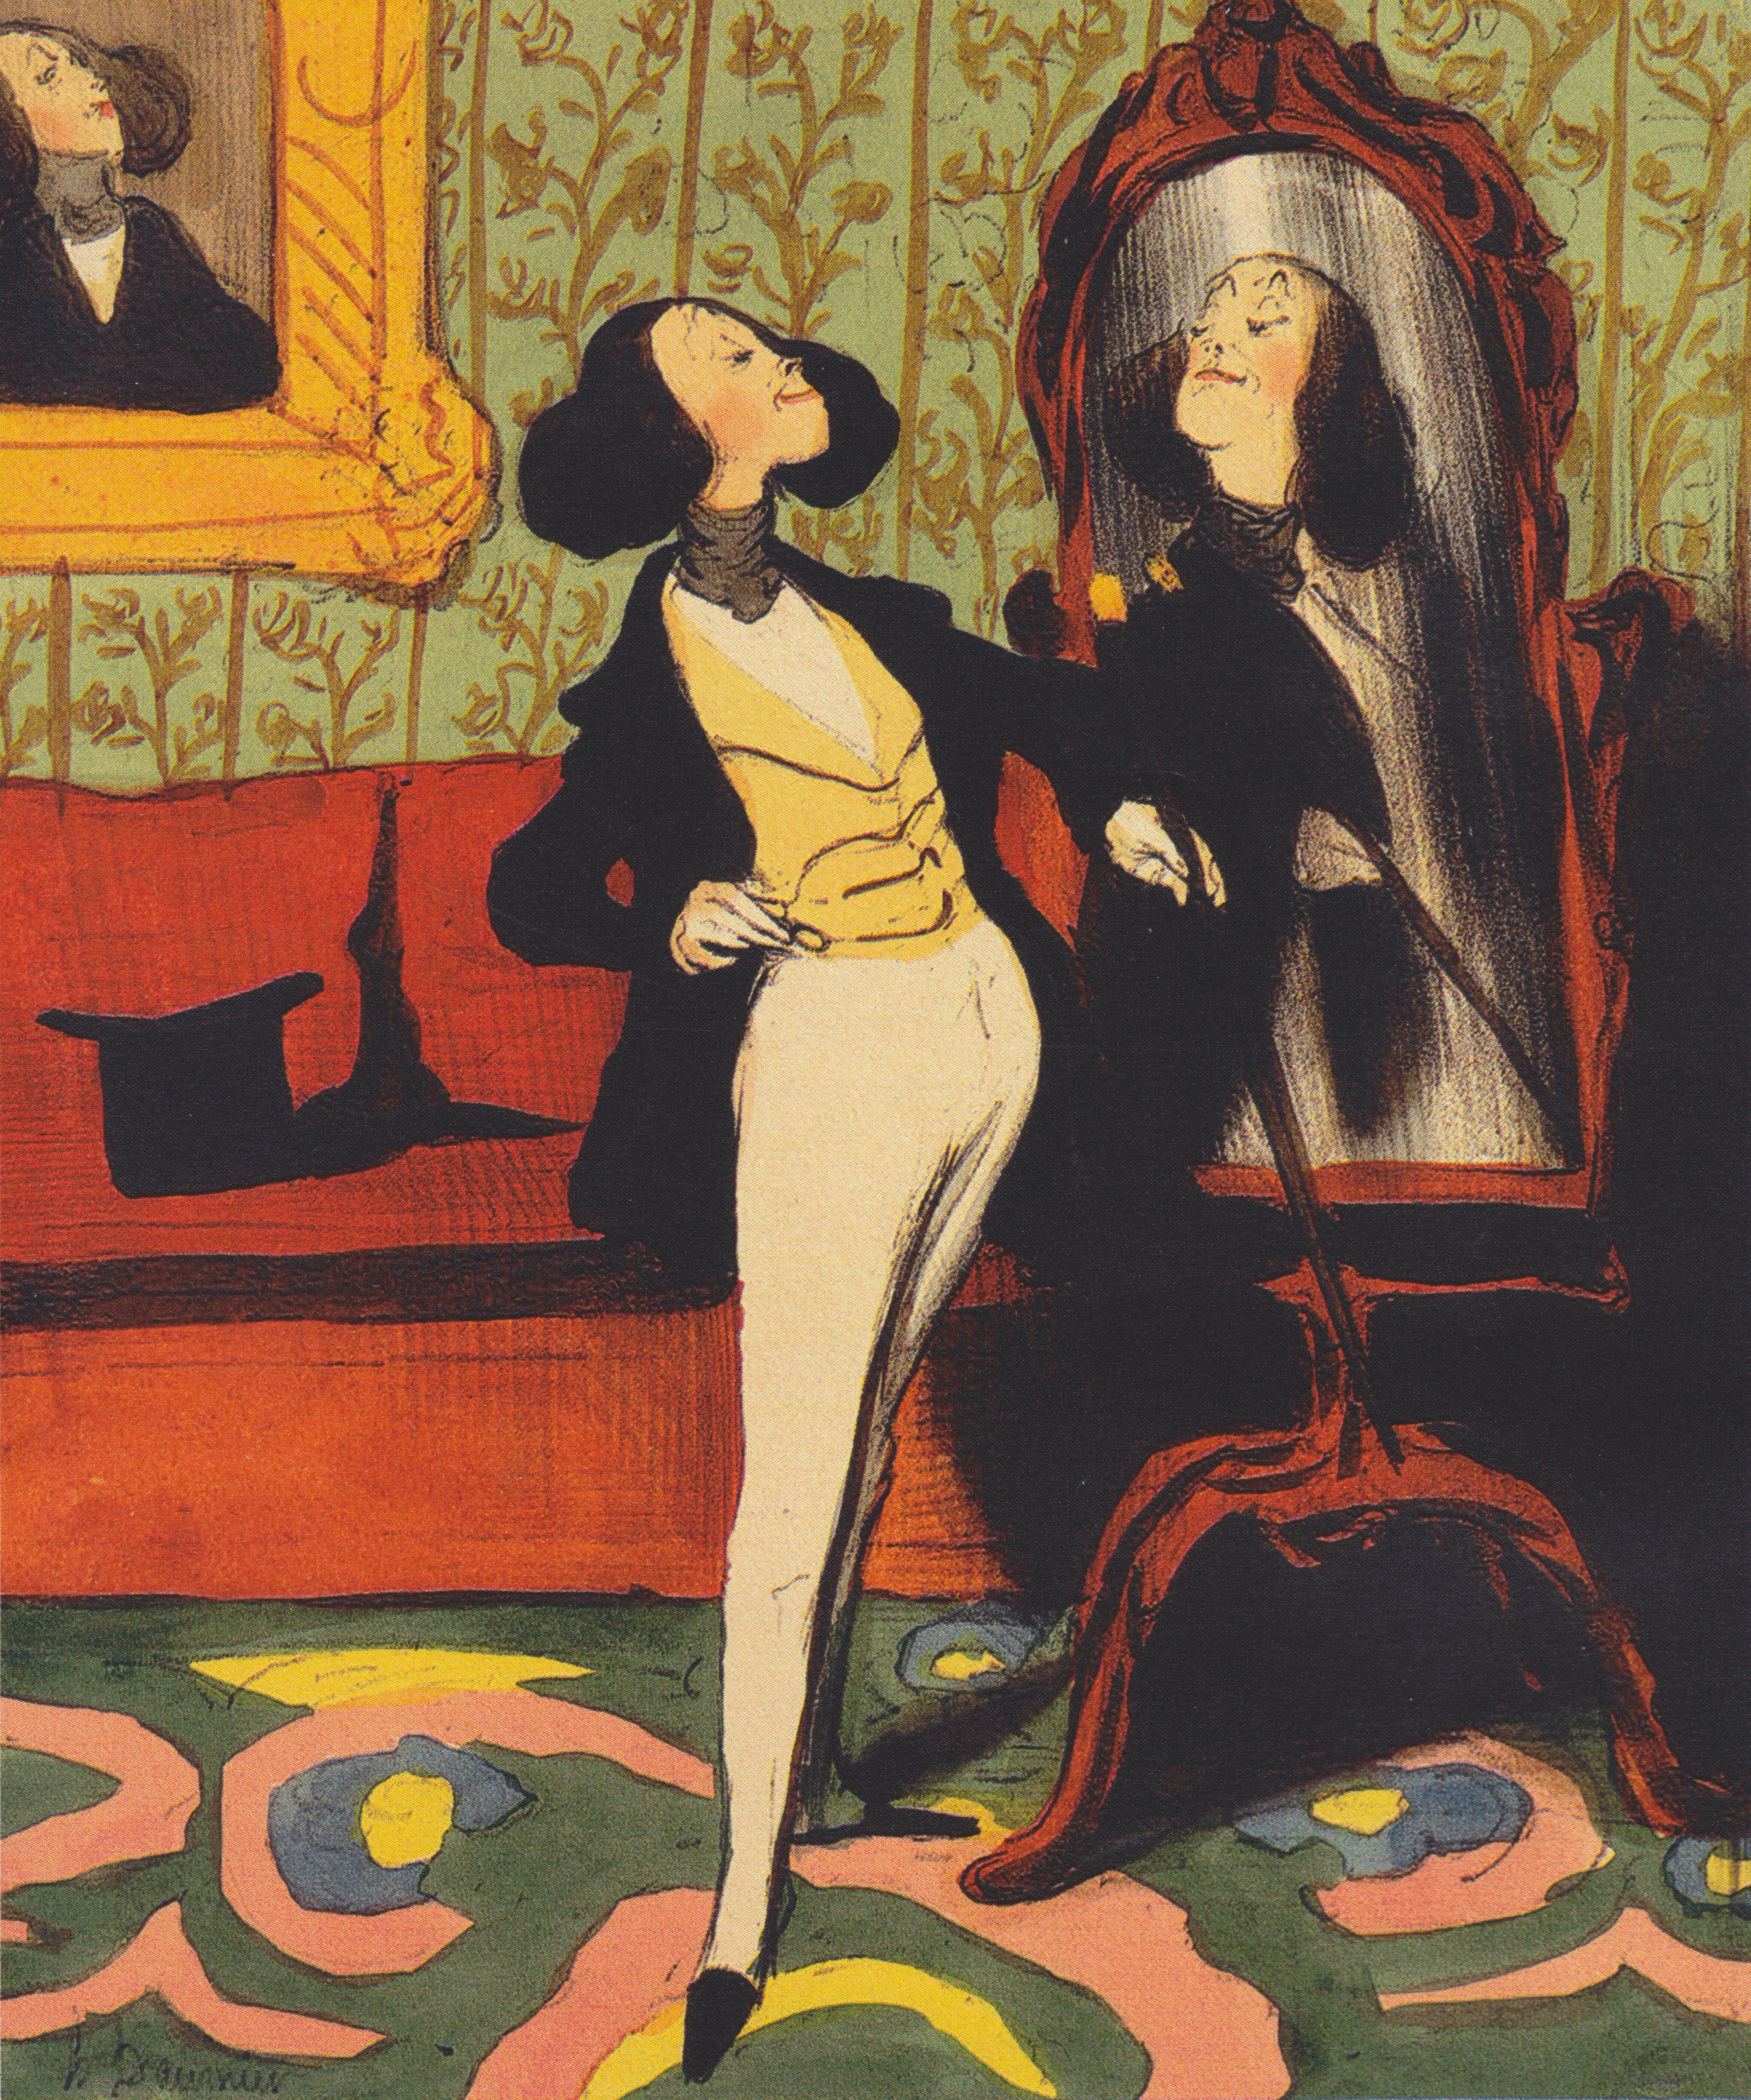 Datei:Honoré Daumier.jpg